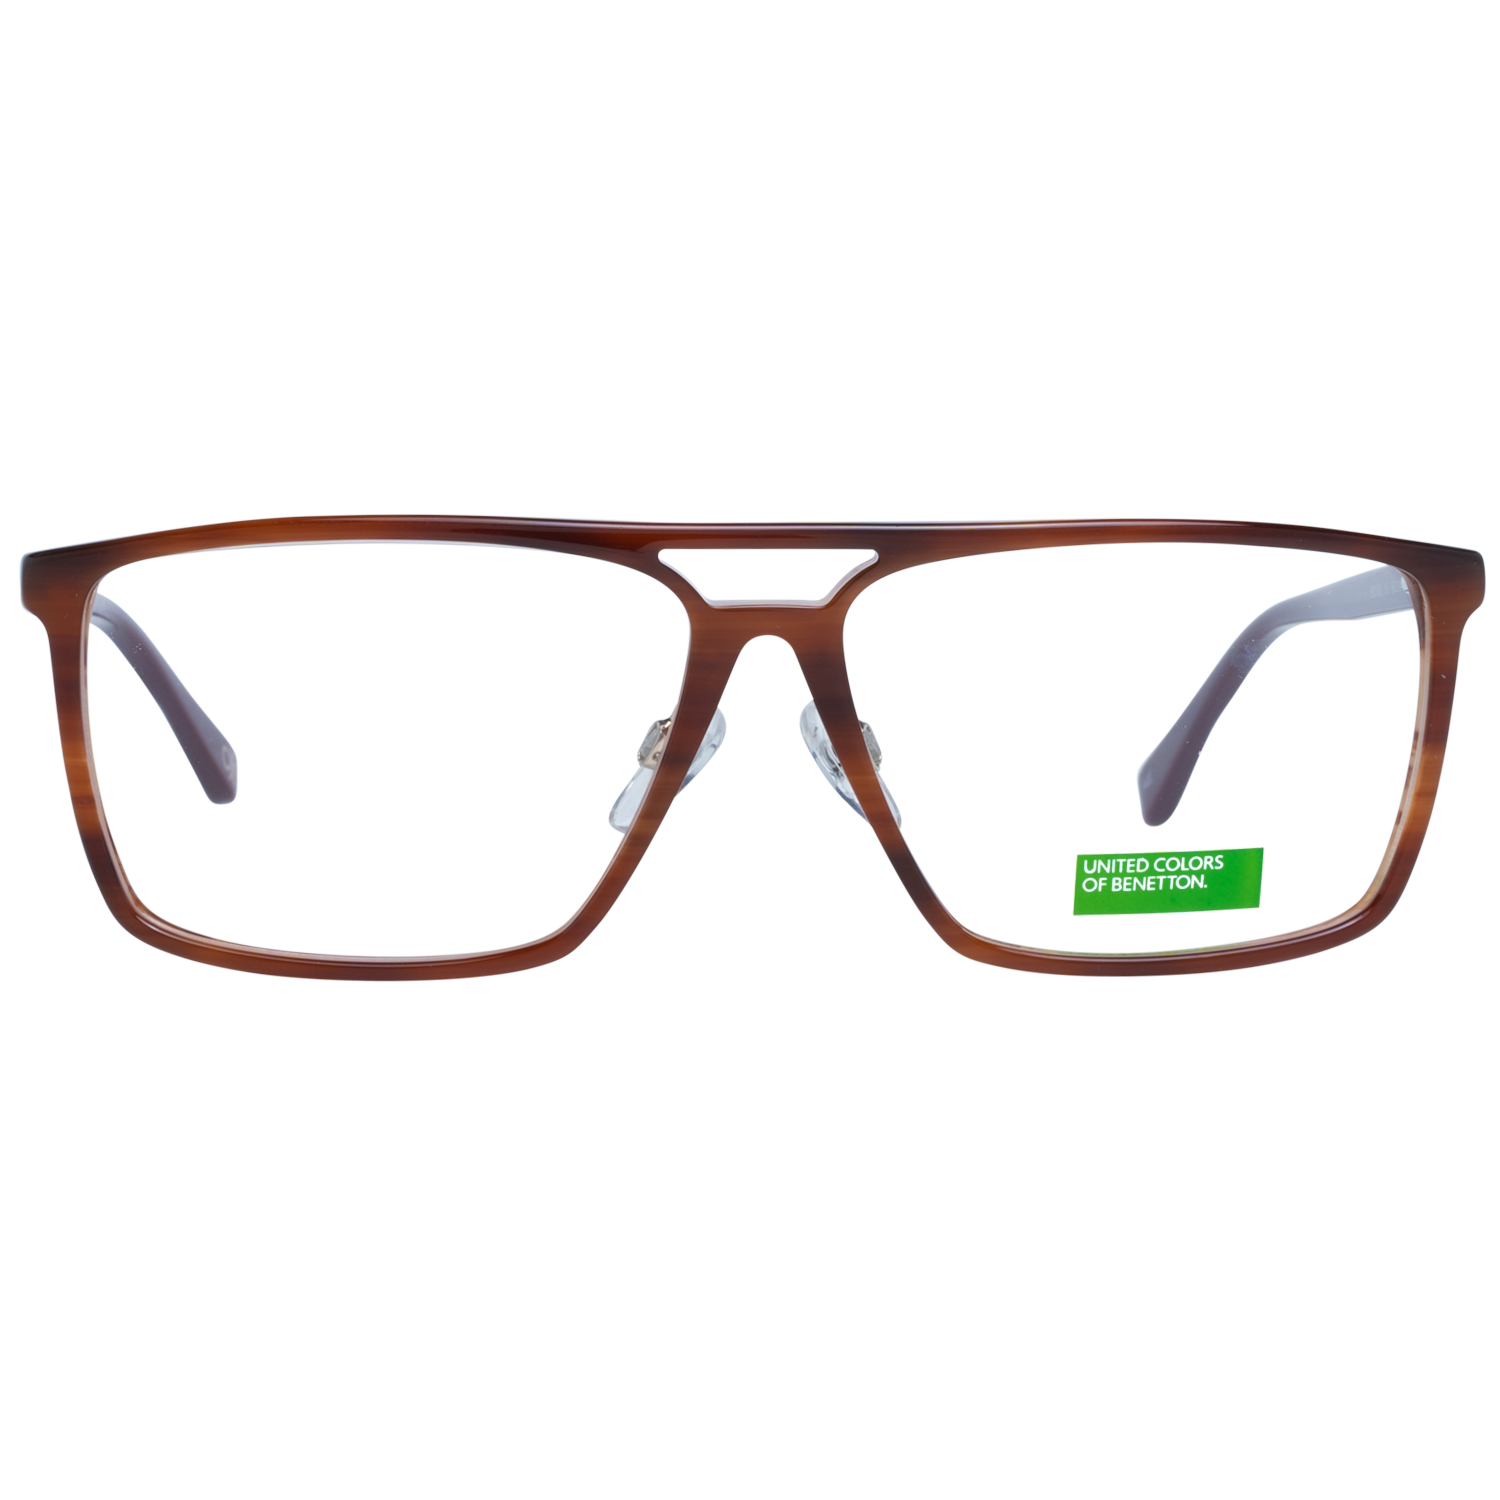 Benetton Frames Benetton Optical Frame BEO1000 151 58 Eyeglasses Eyewear UK USA Australia 